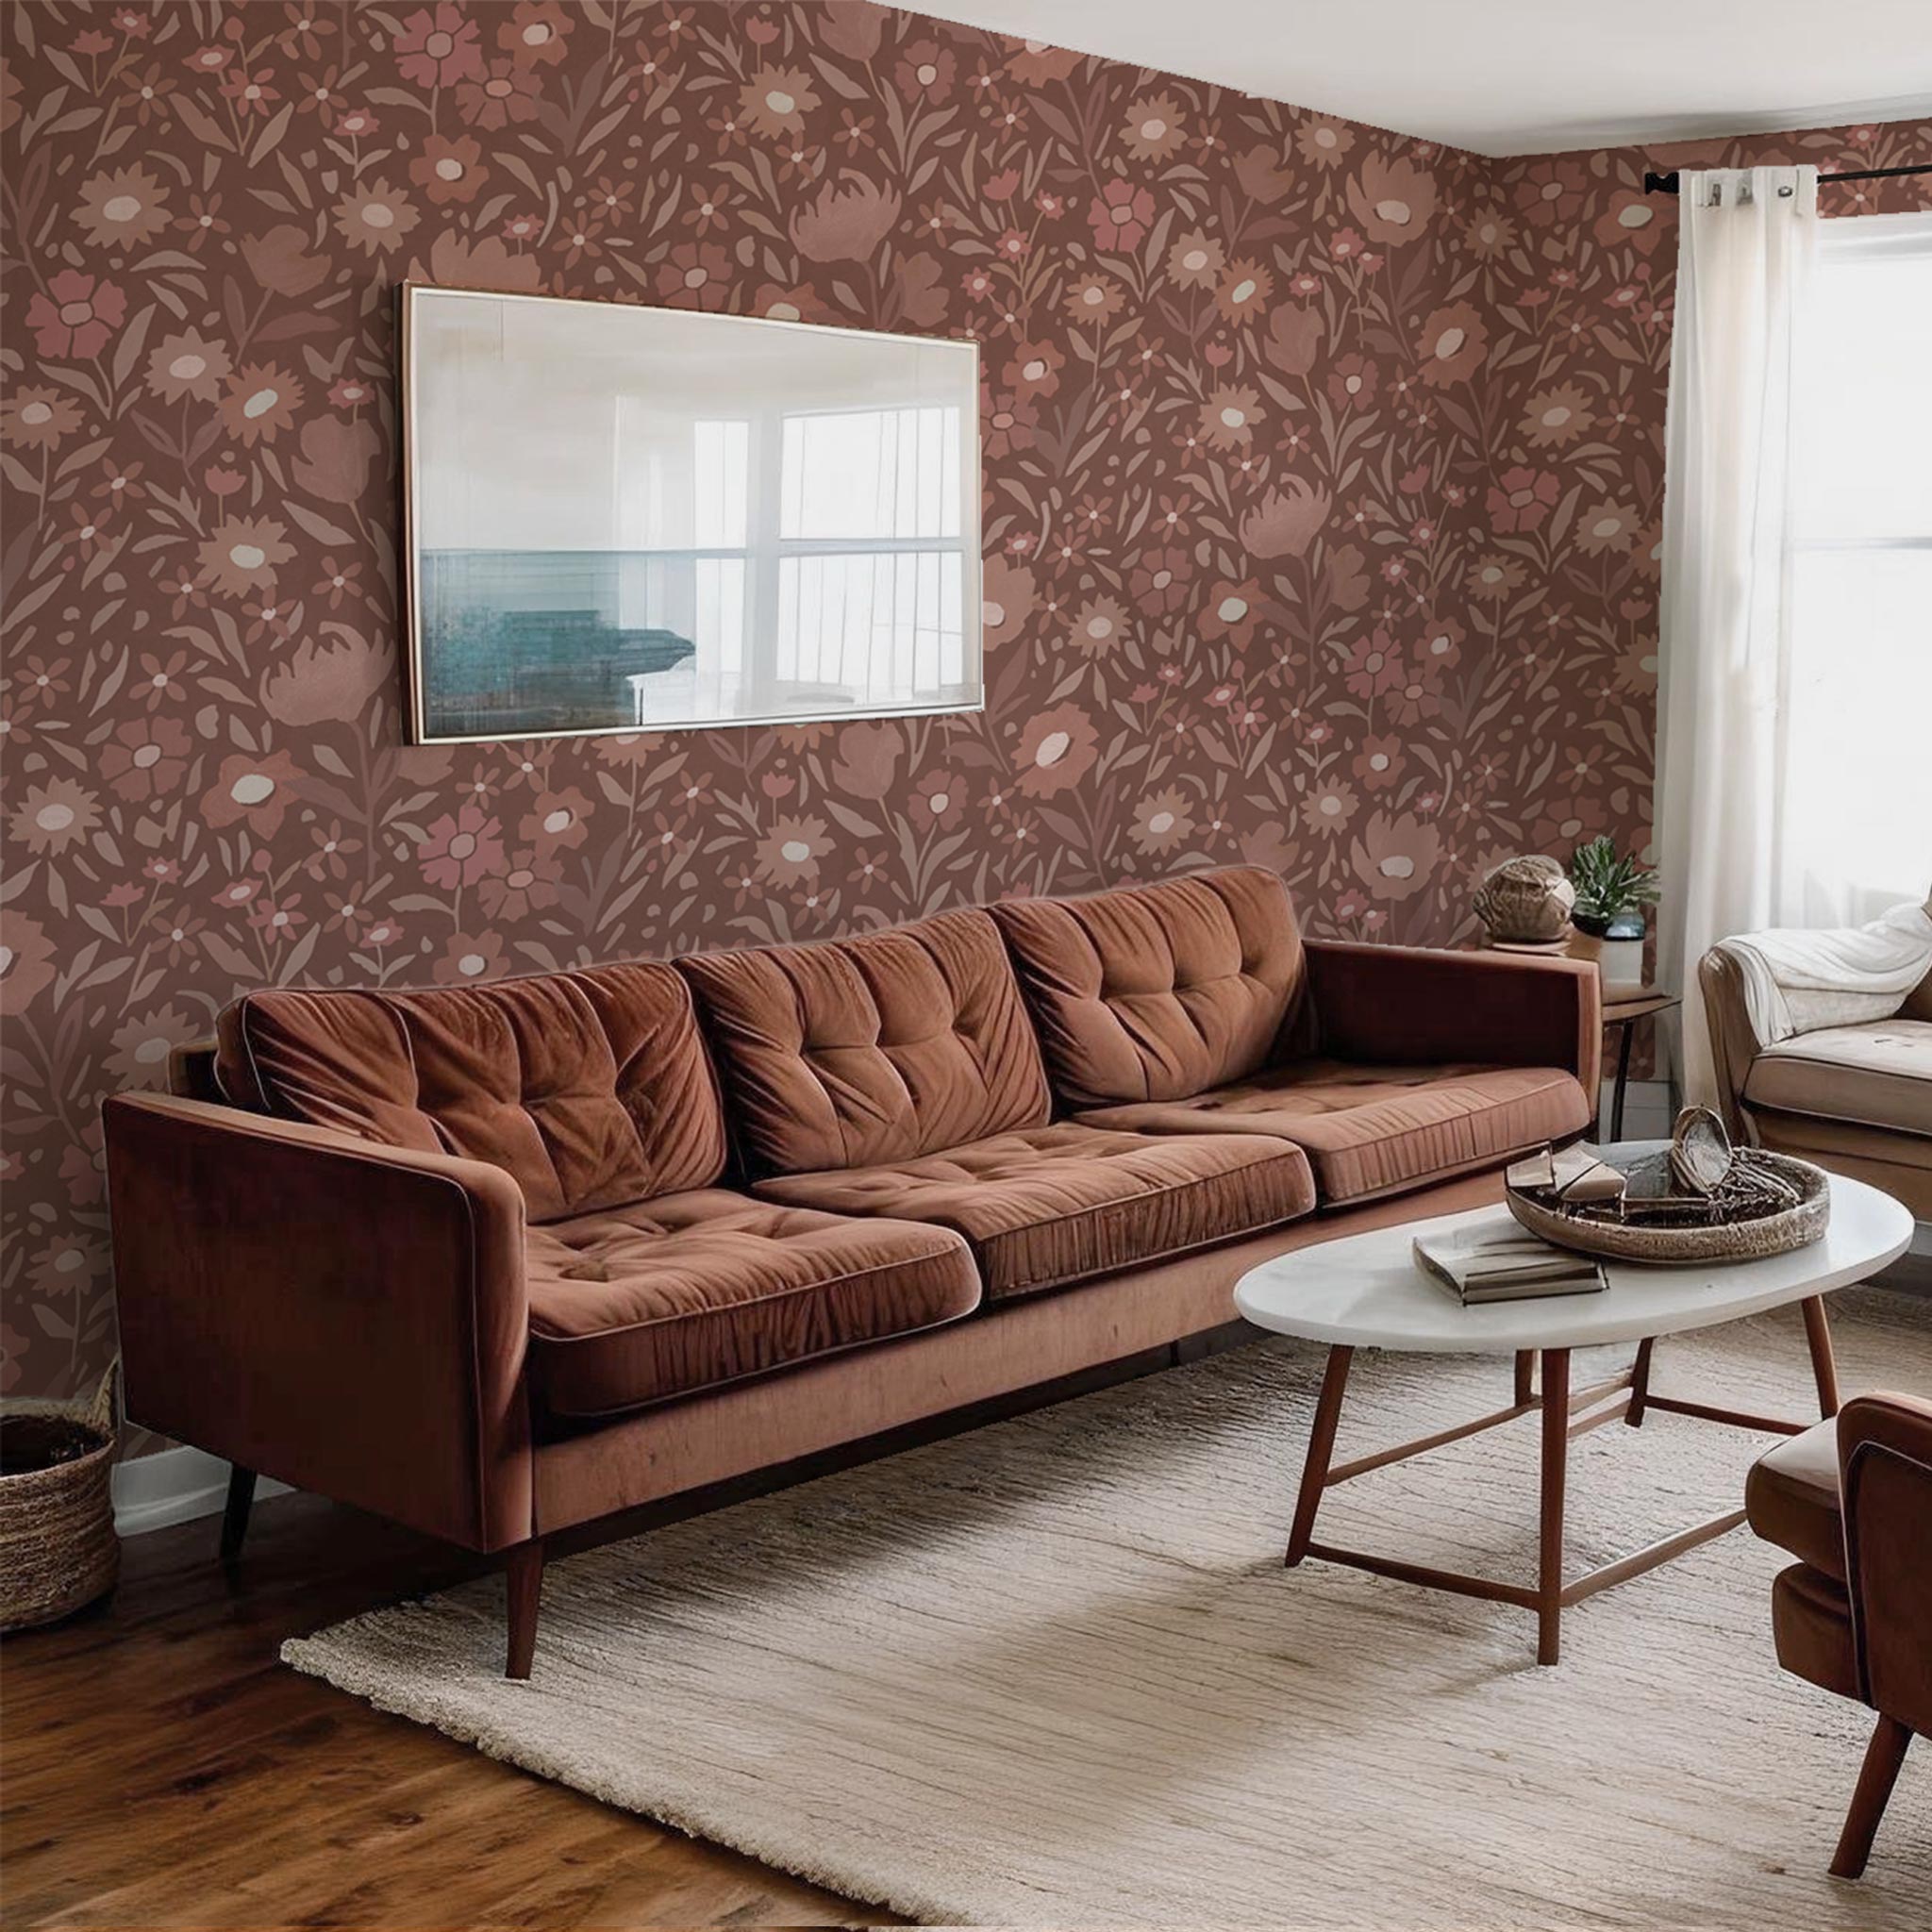 Habita wallpaper design - rust Maude floral pattern in living room